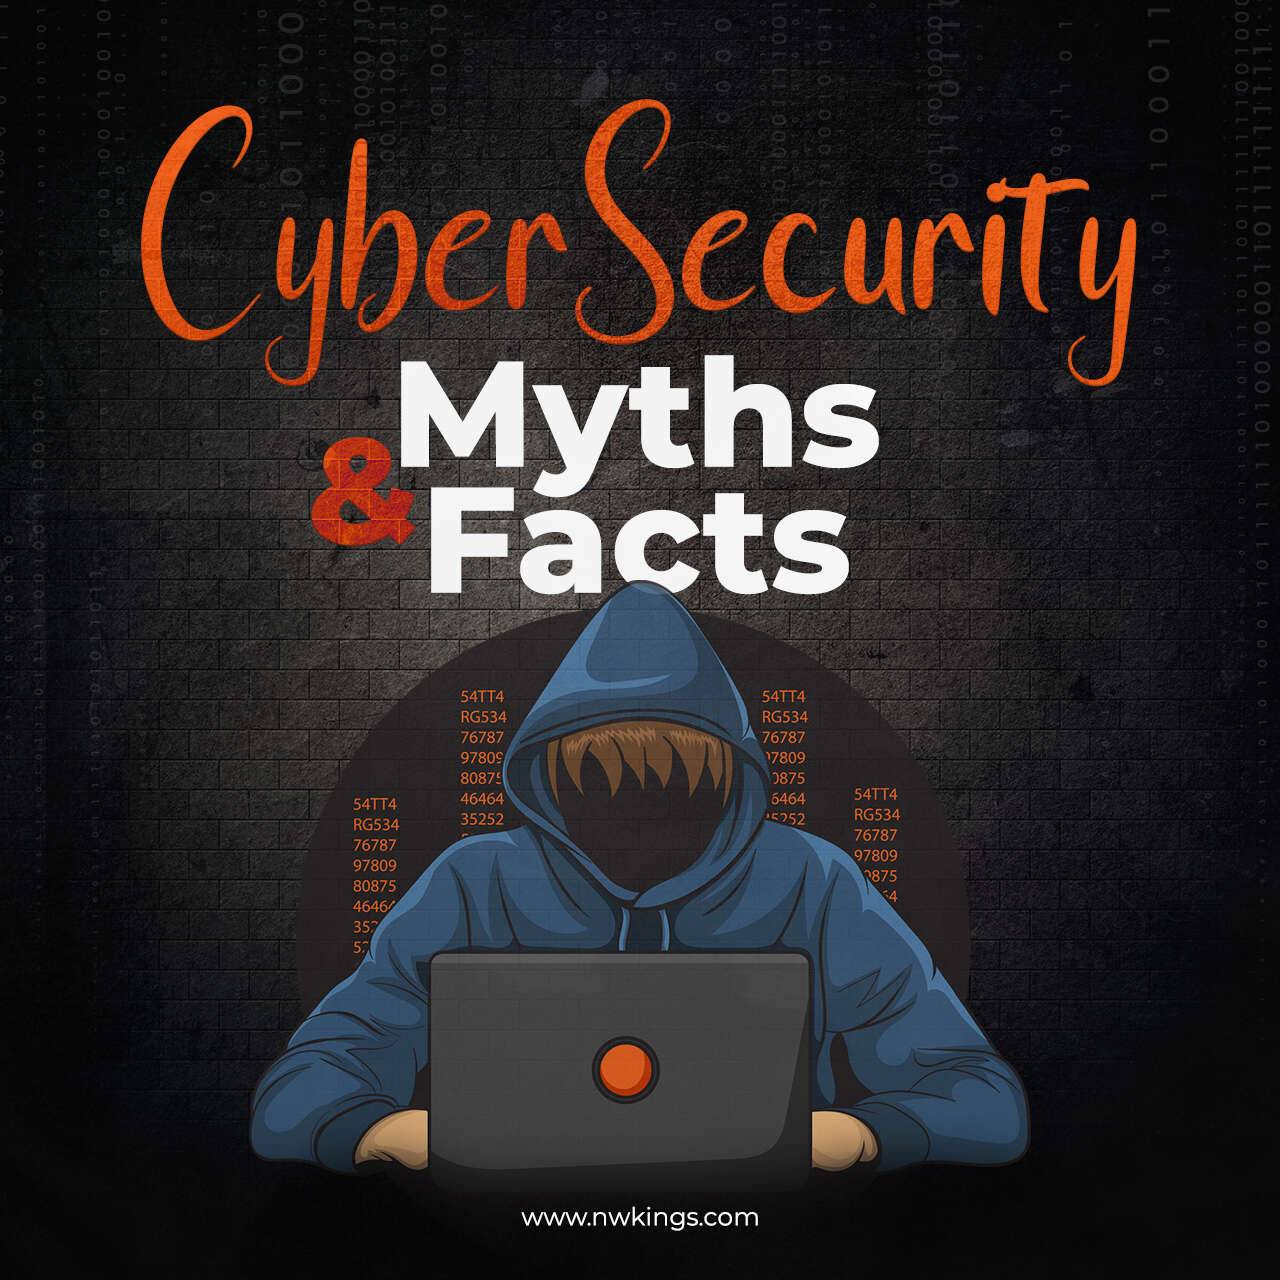 CyberSecurity Myths